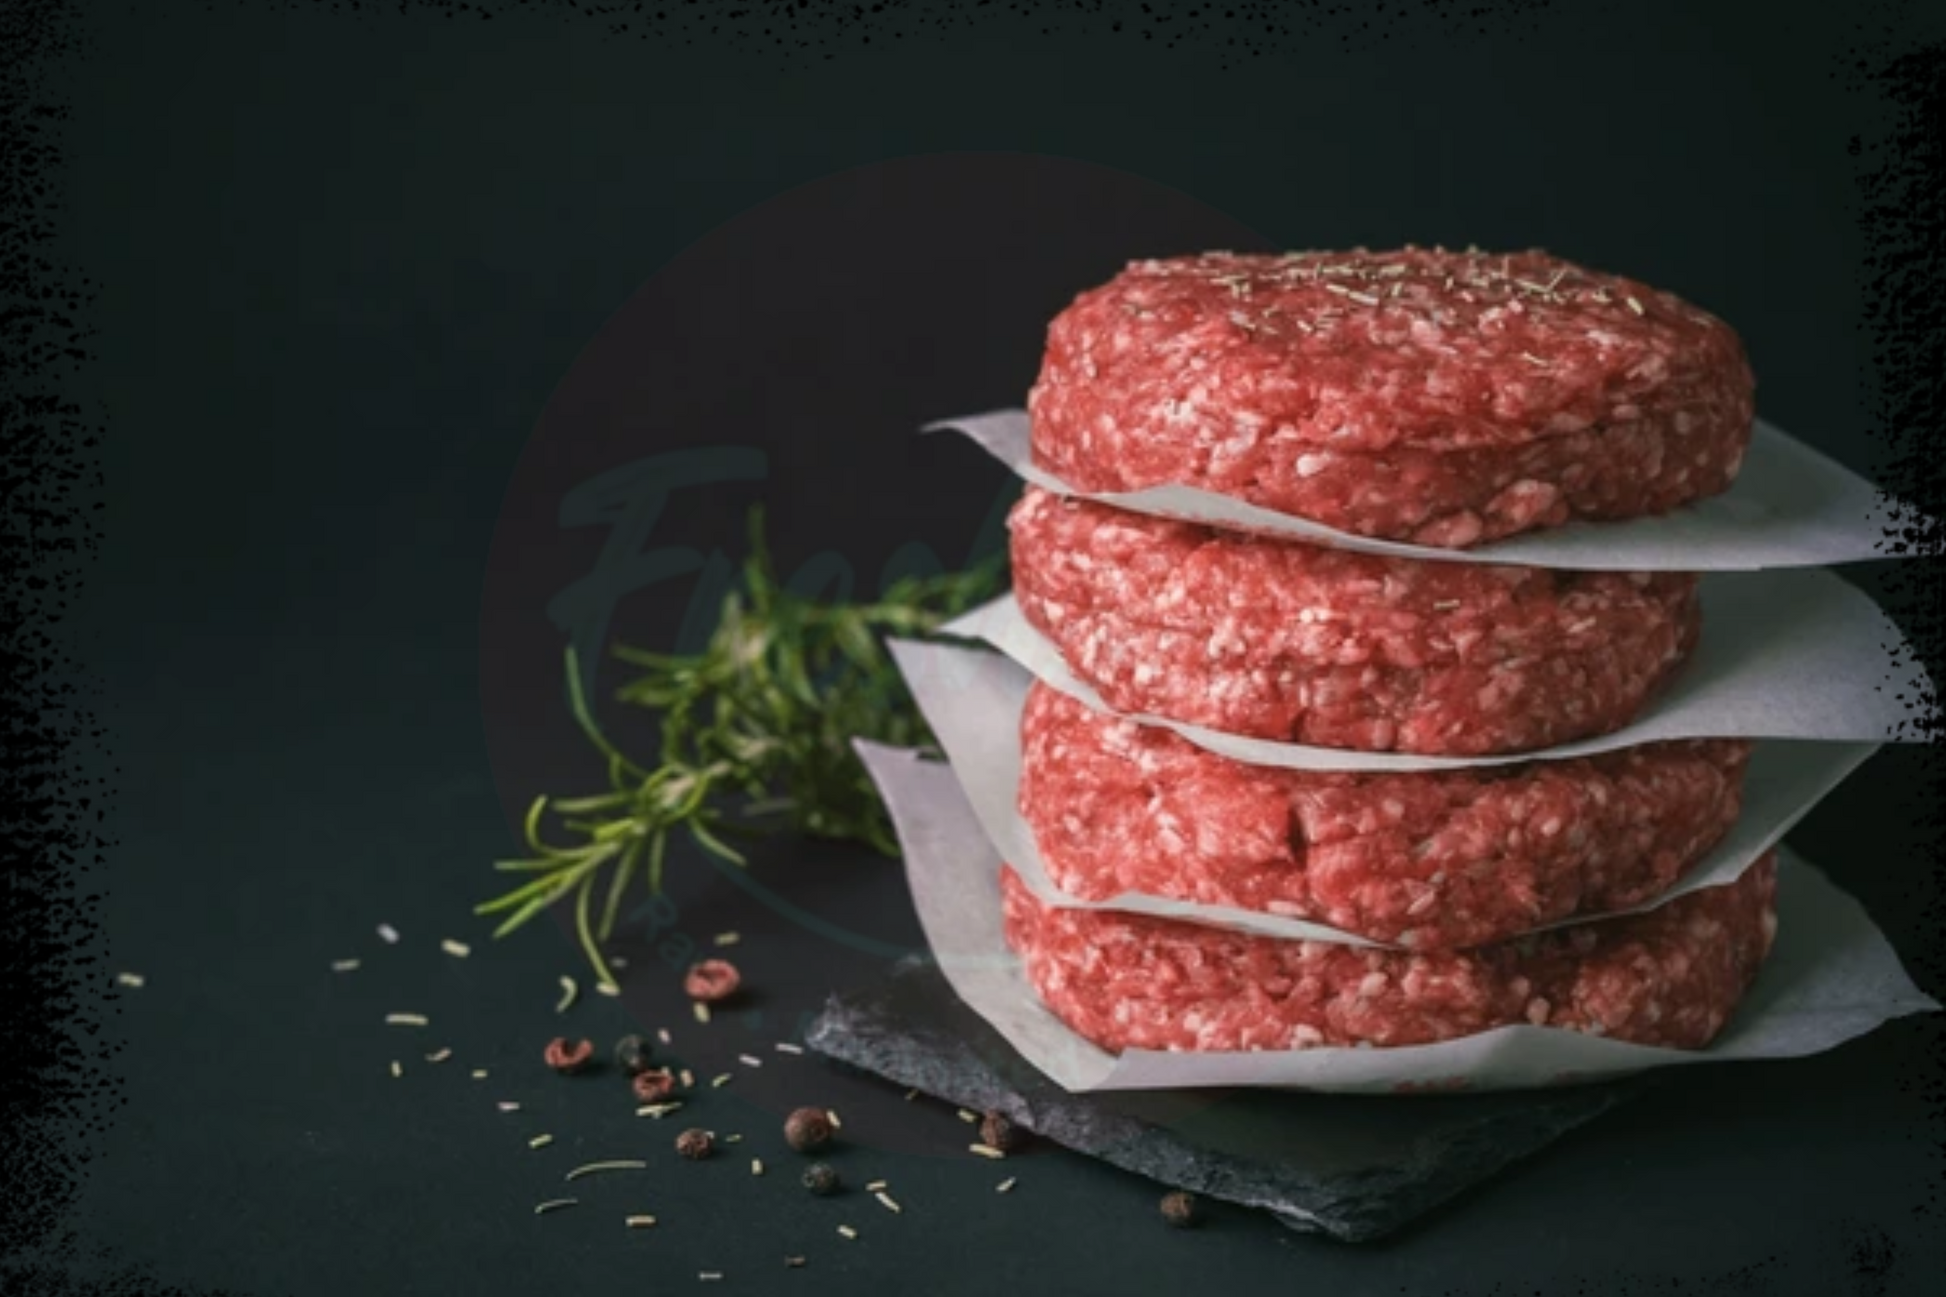 Grass-Fed Lamb Burger, Australia (Dhs 64.90/kg) - Chilled